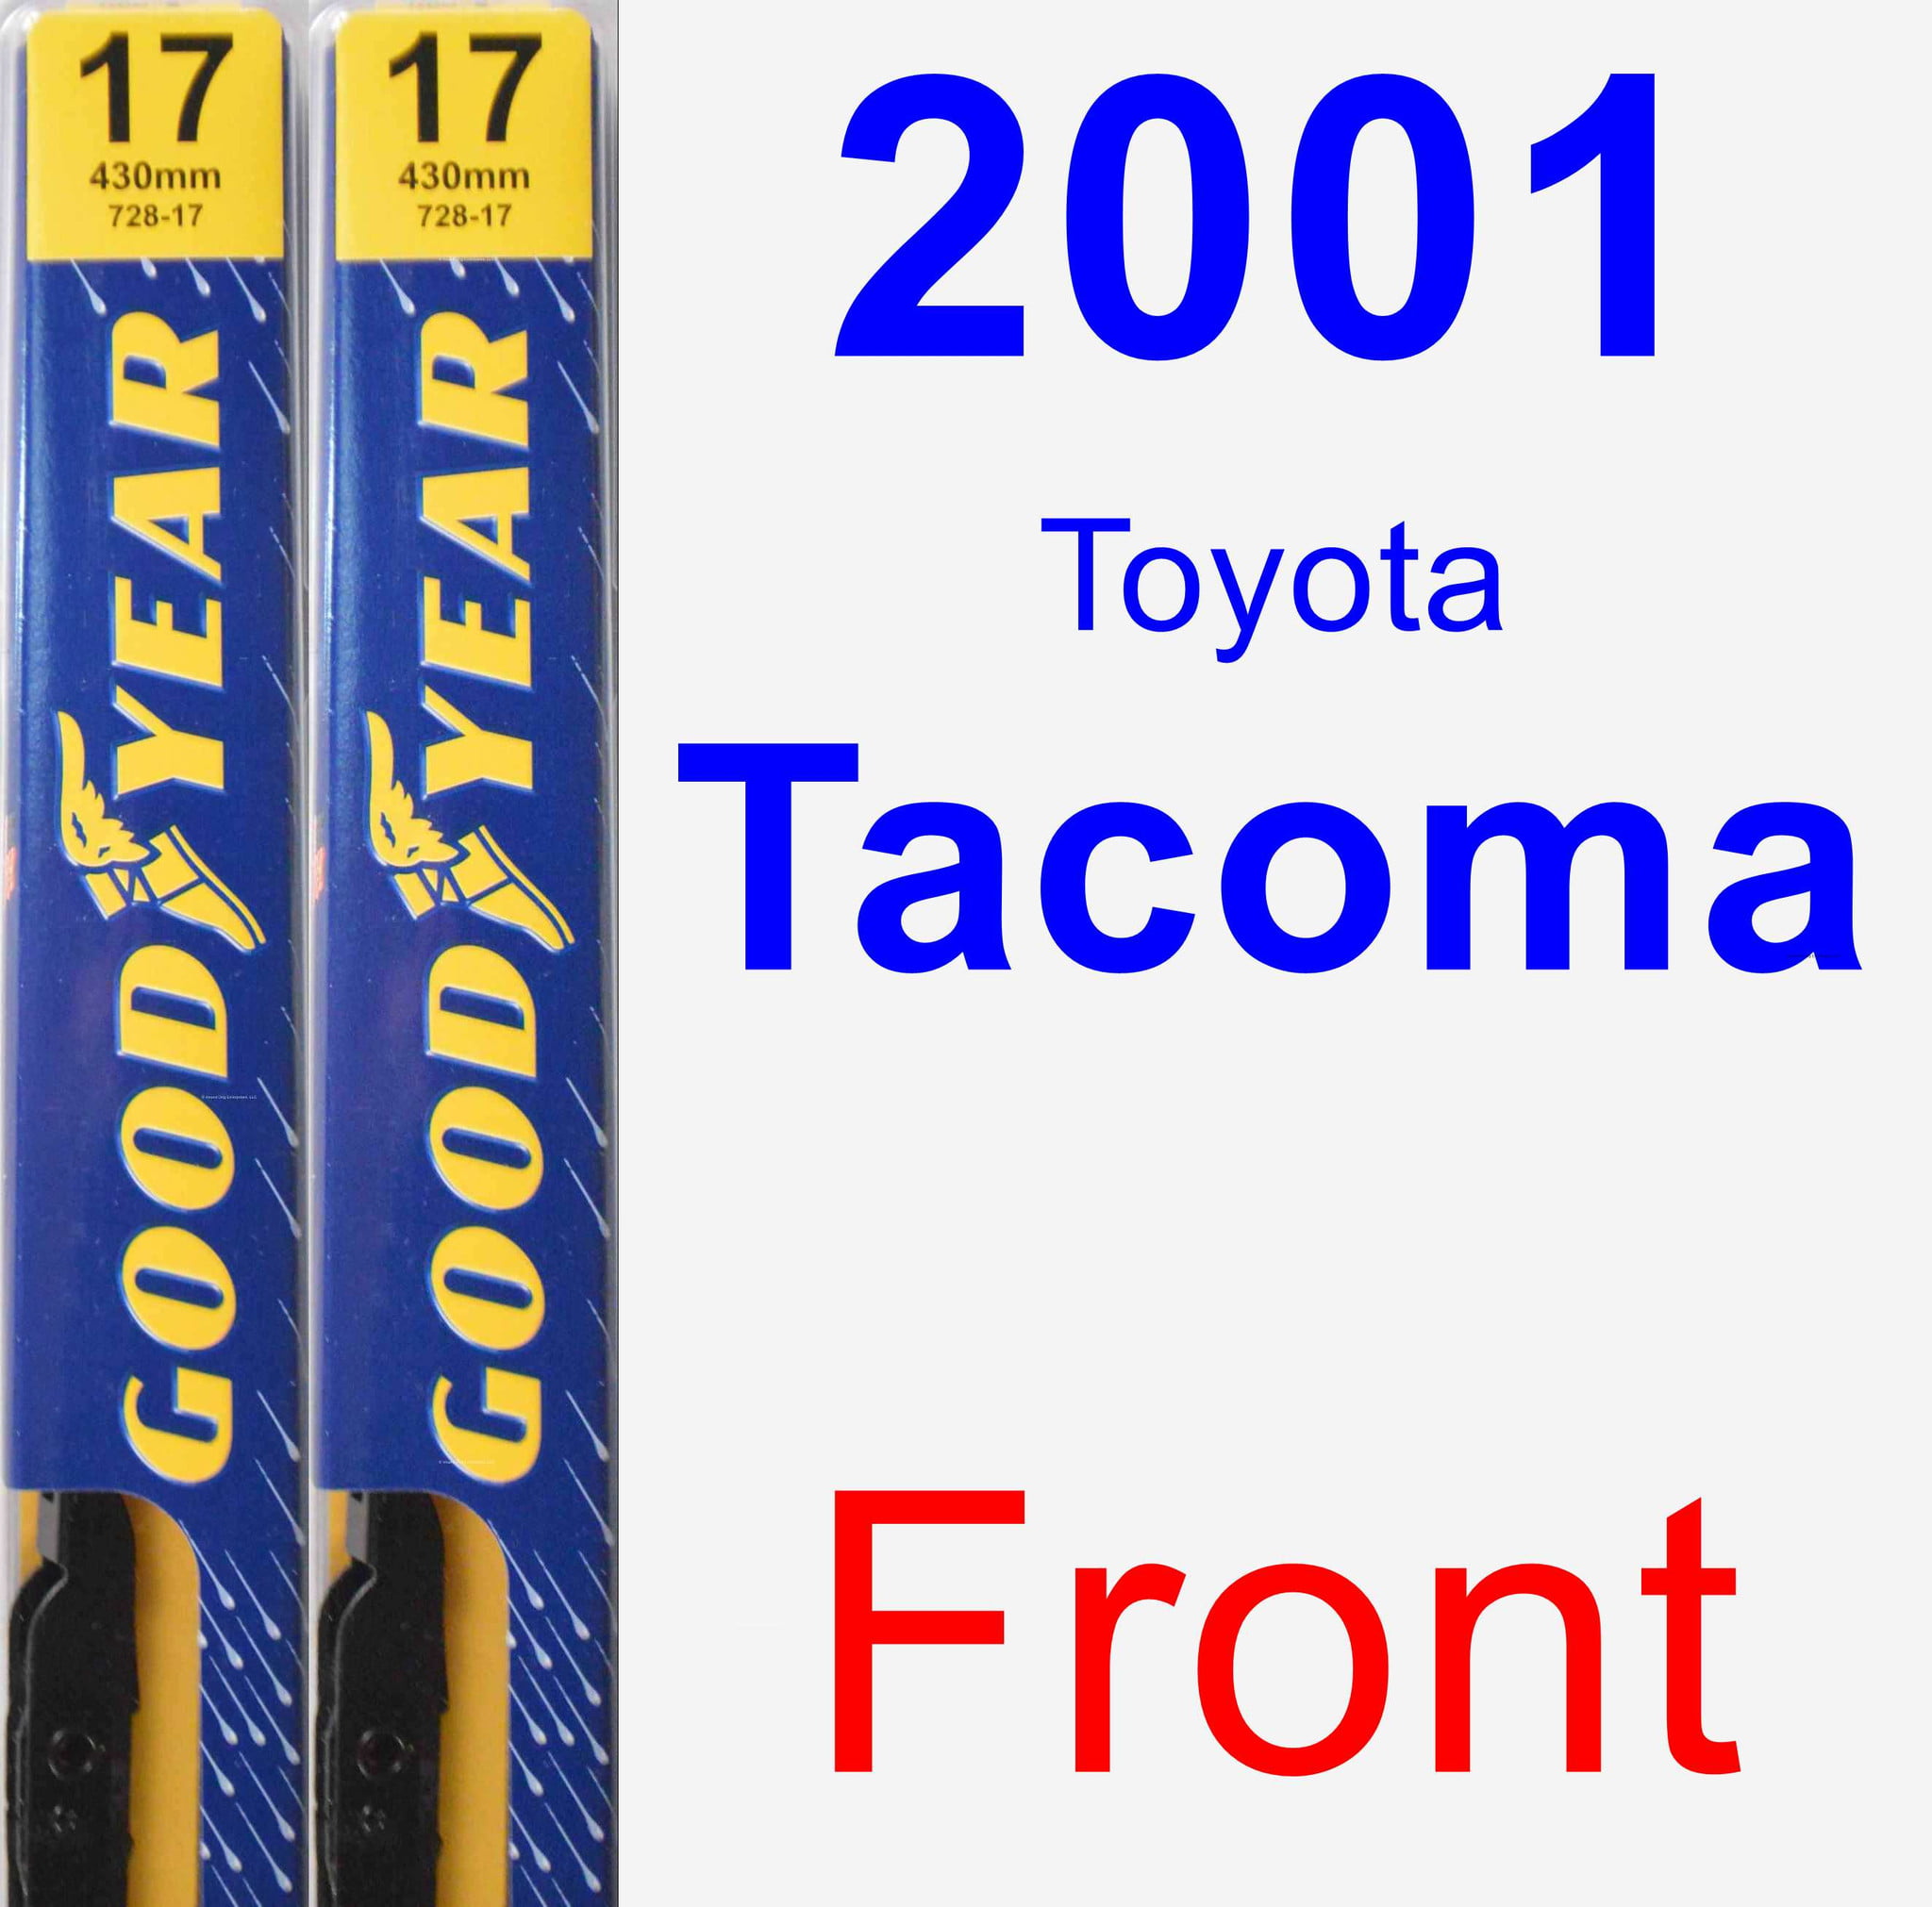 Qty 1 Wiper Premium Beam Blade fits 1995-2004 Toyota Tacoma - 19170